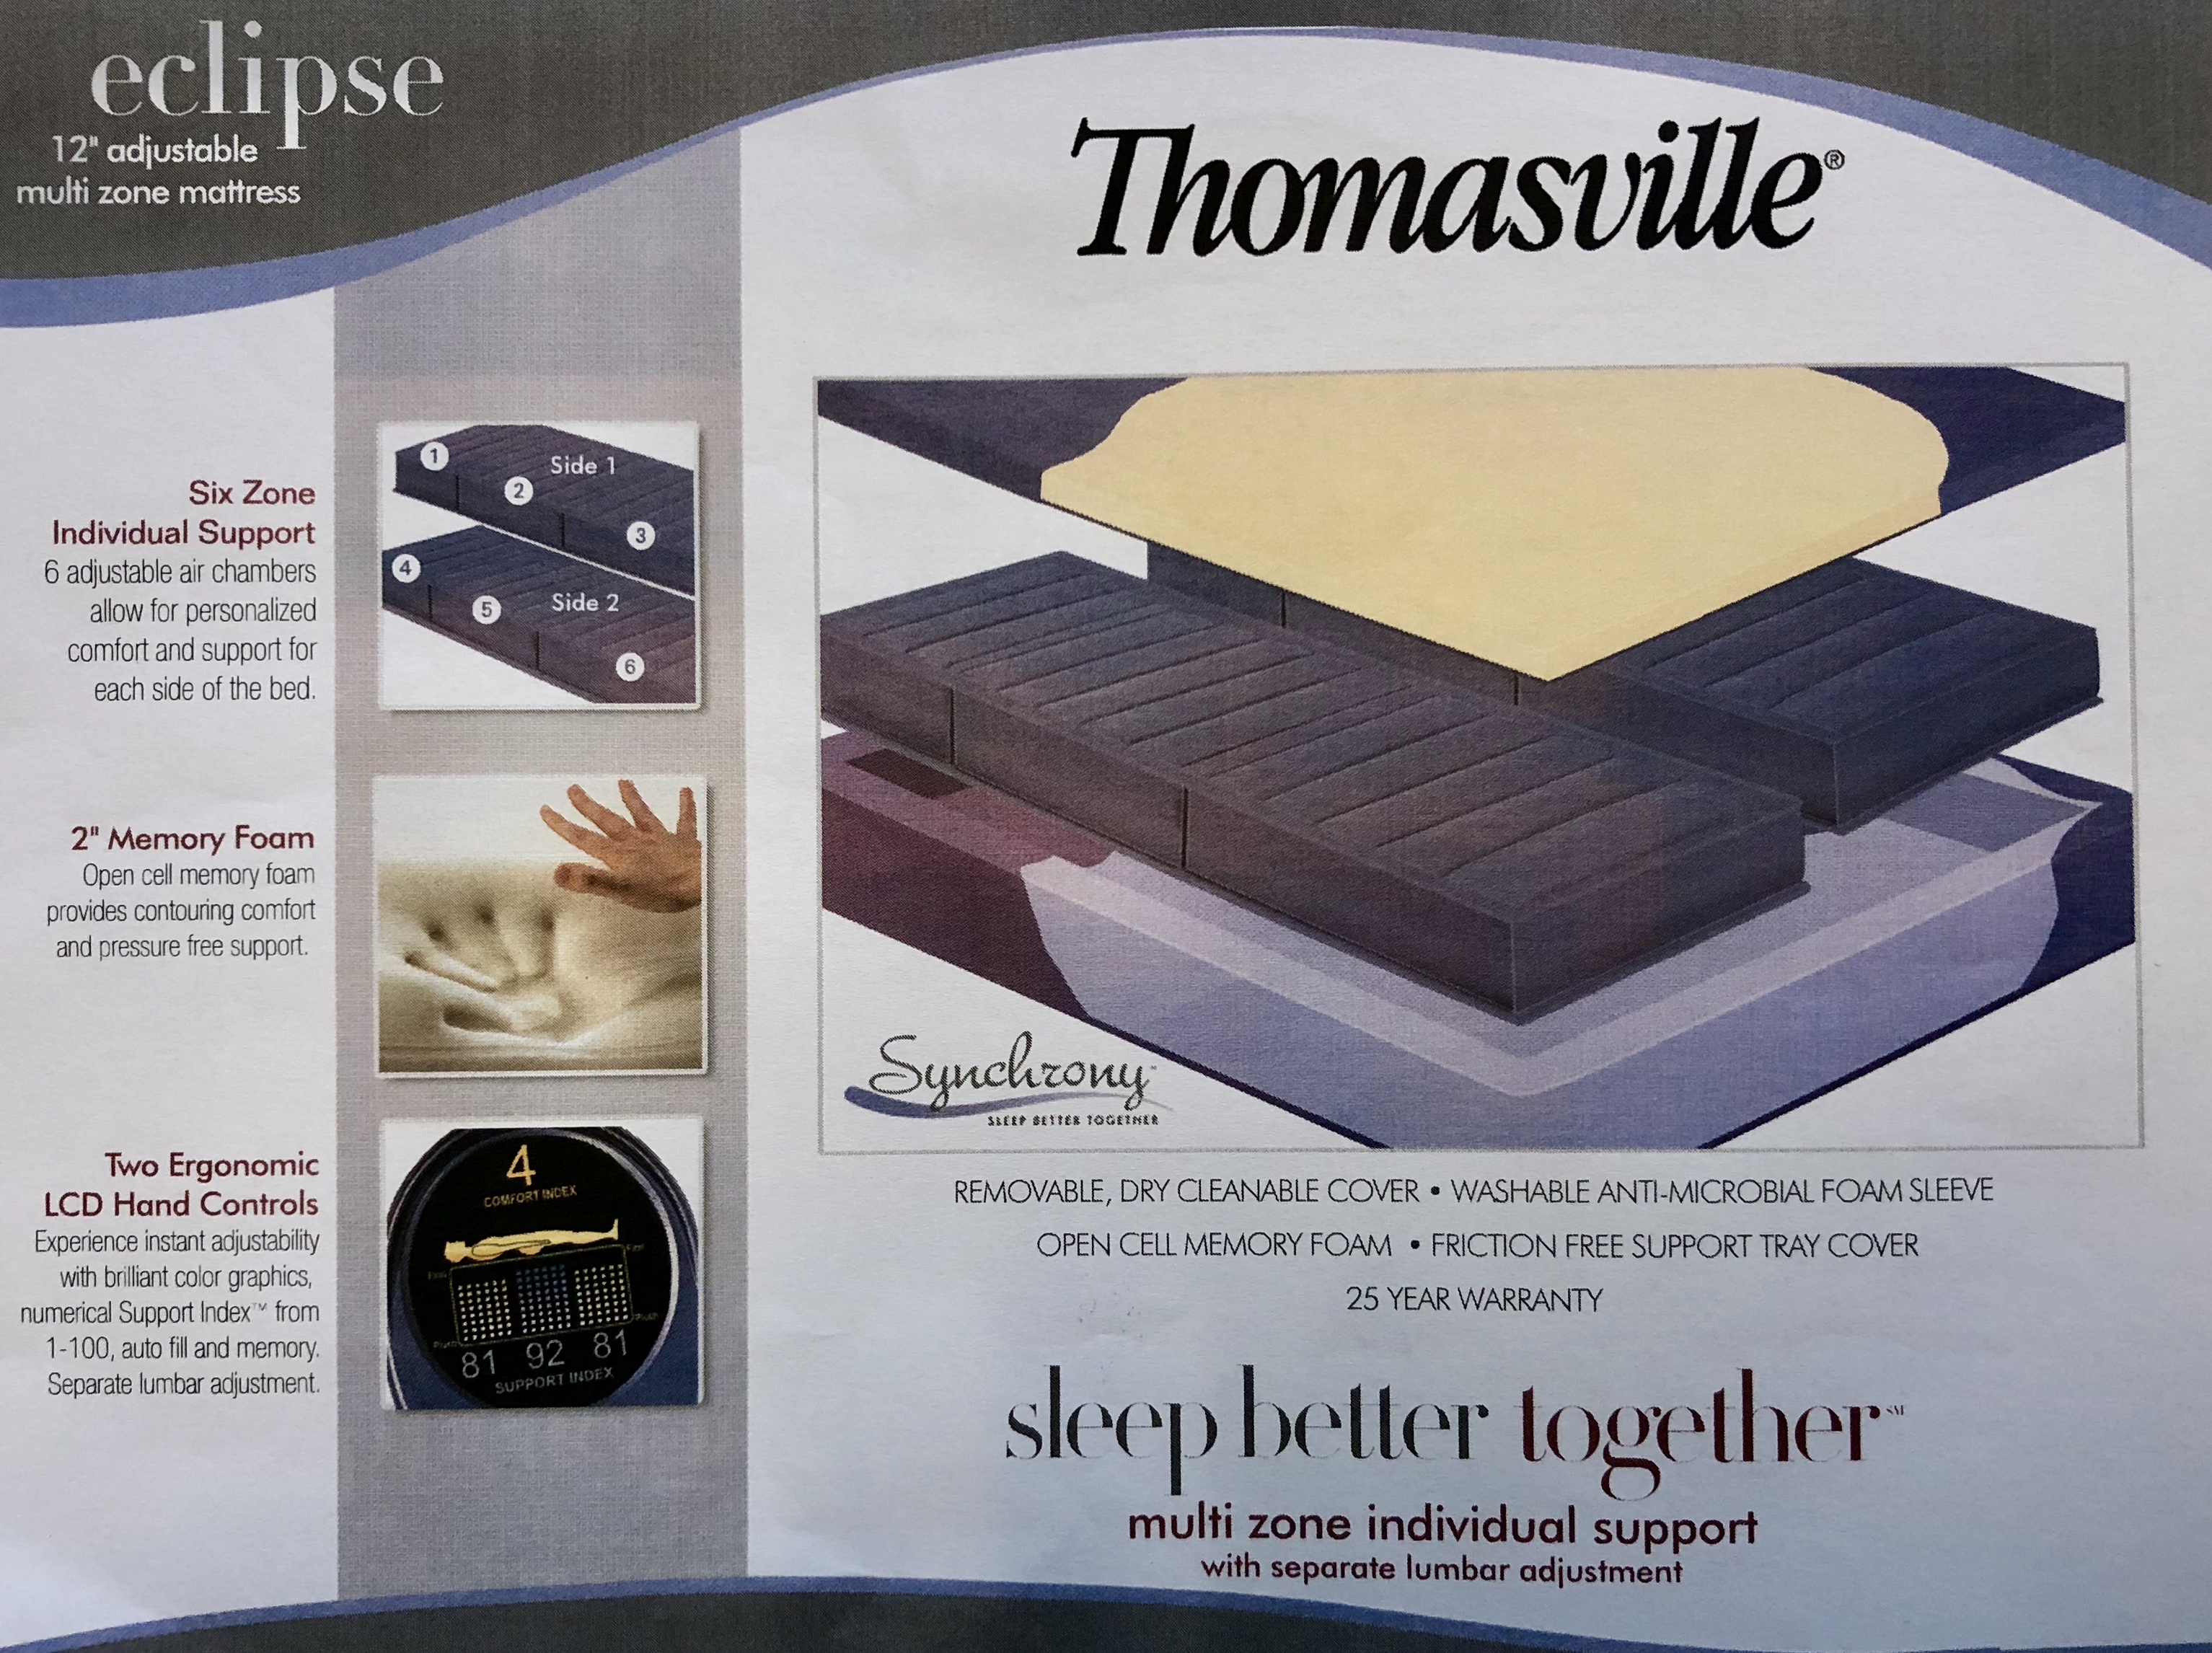 Thomasville Synchrony Eclipse Airbed, Thomasville Split King Adjustable Bed